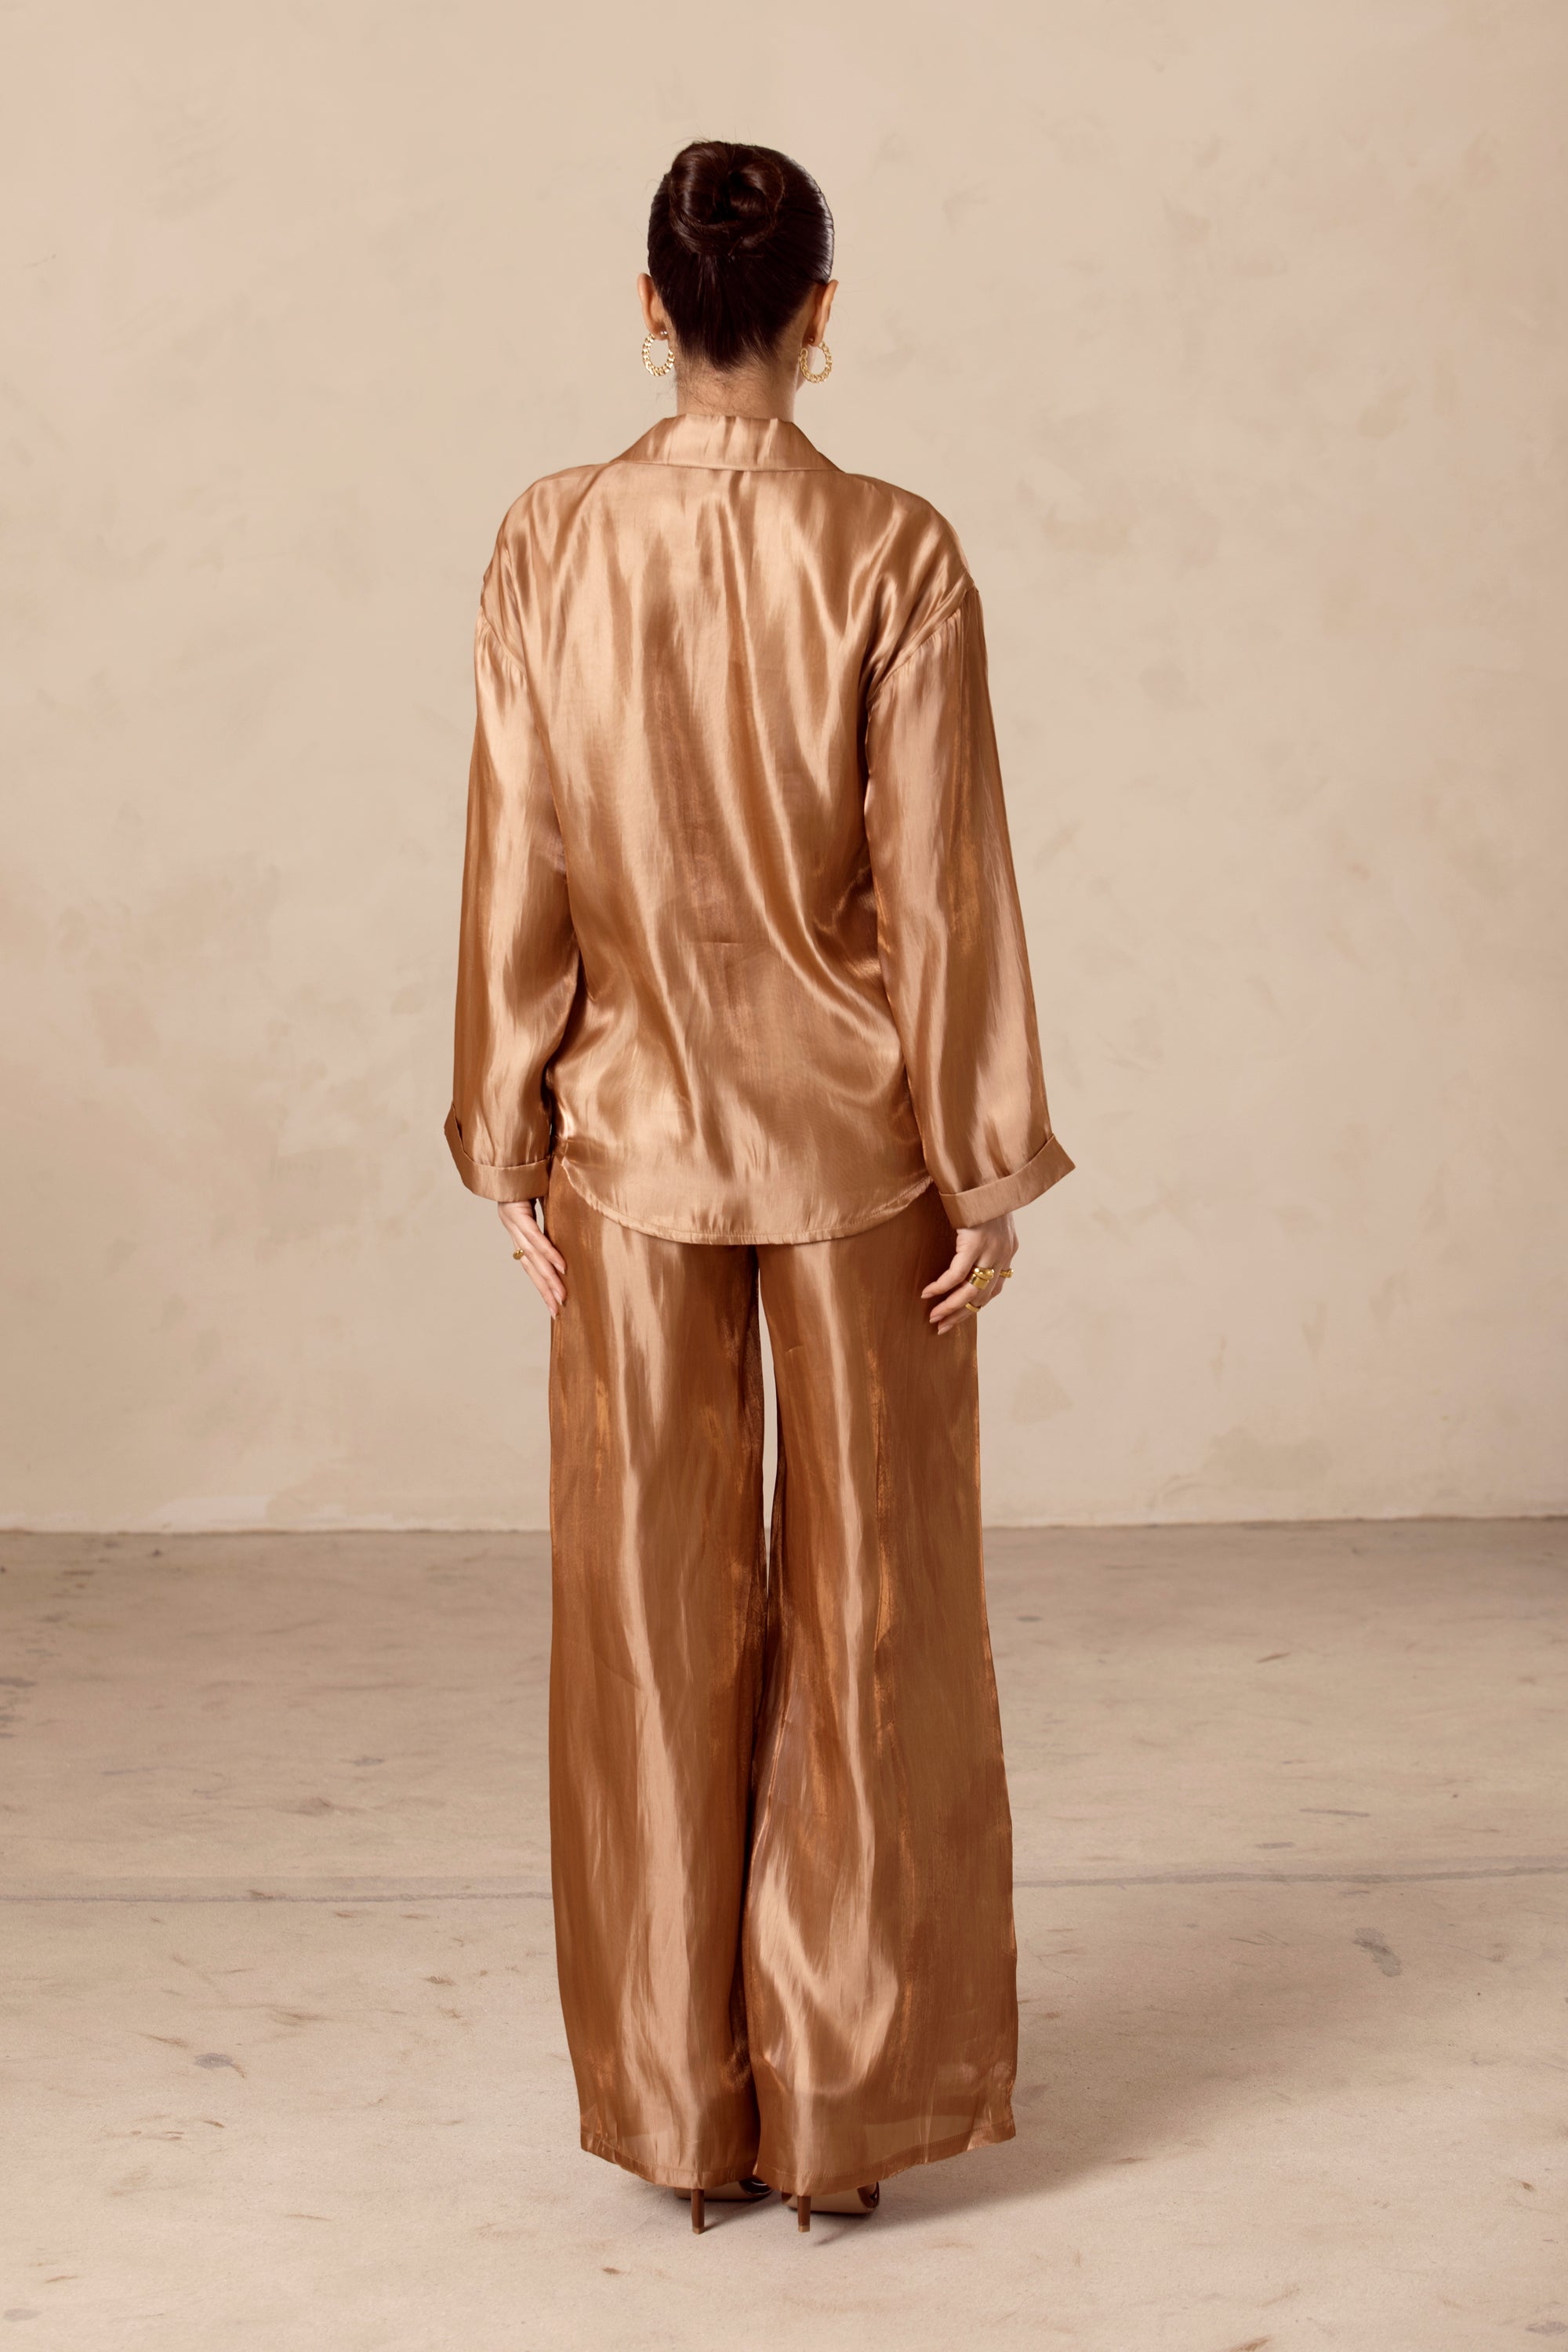 Anikka Satin Button Down Shirt - Cinnamon Veiled Collection 